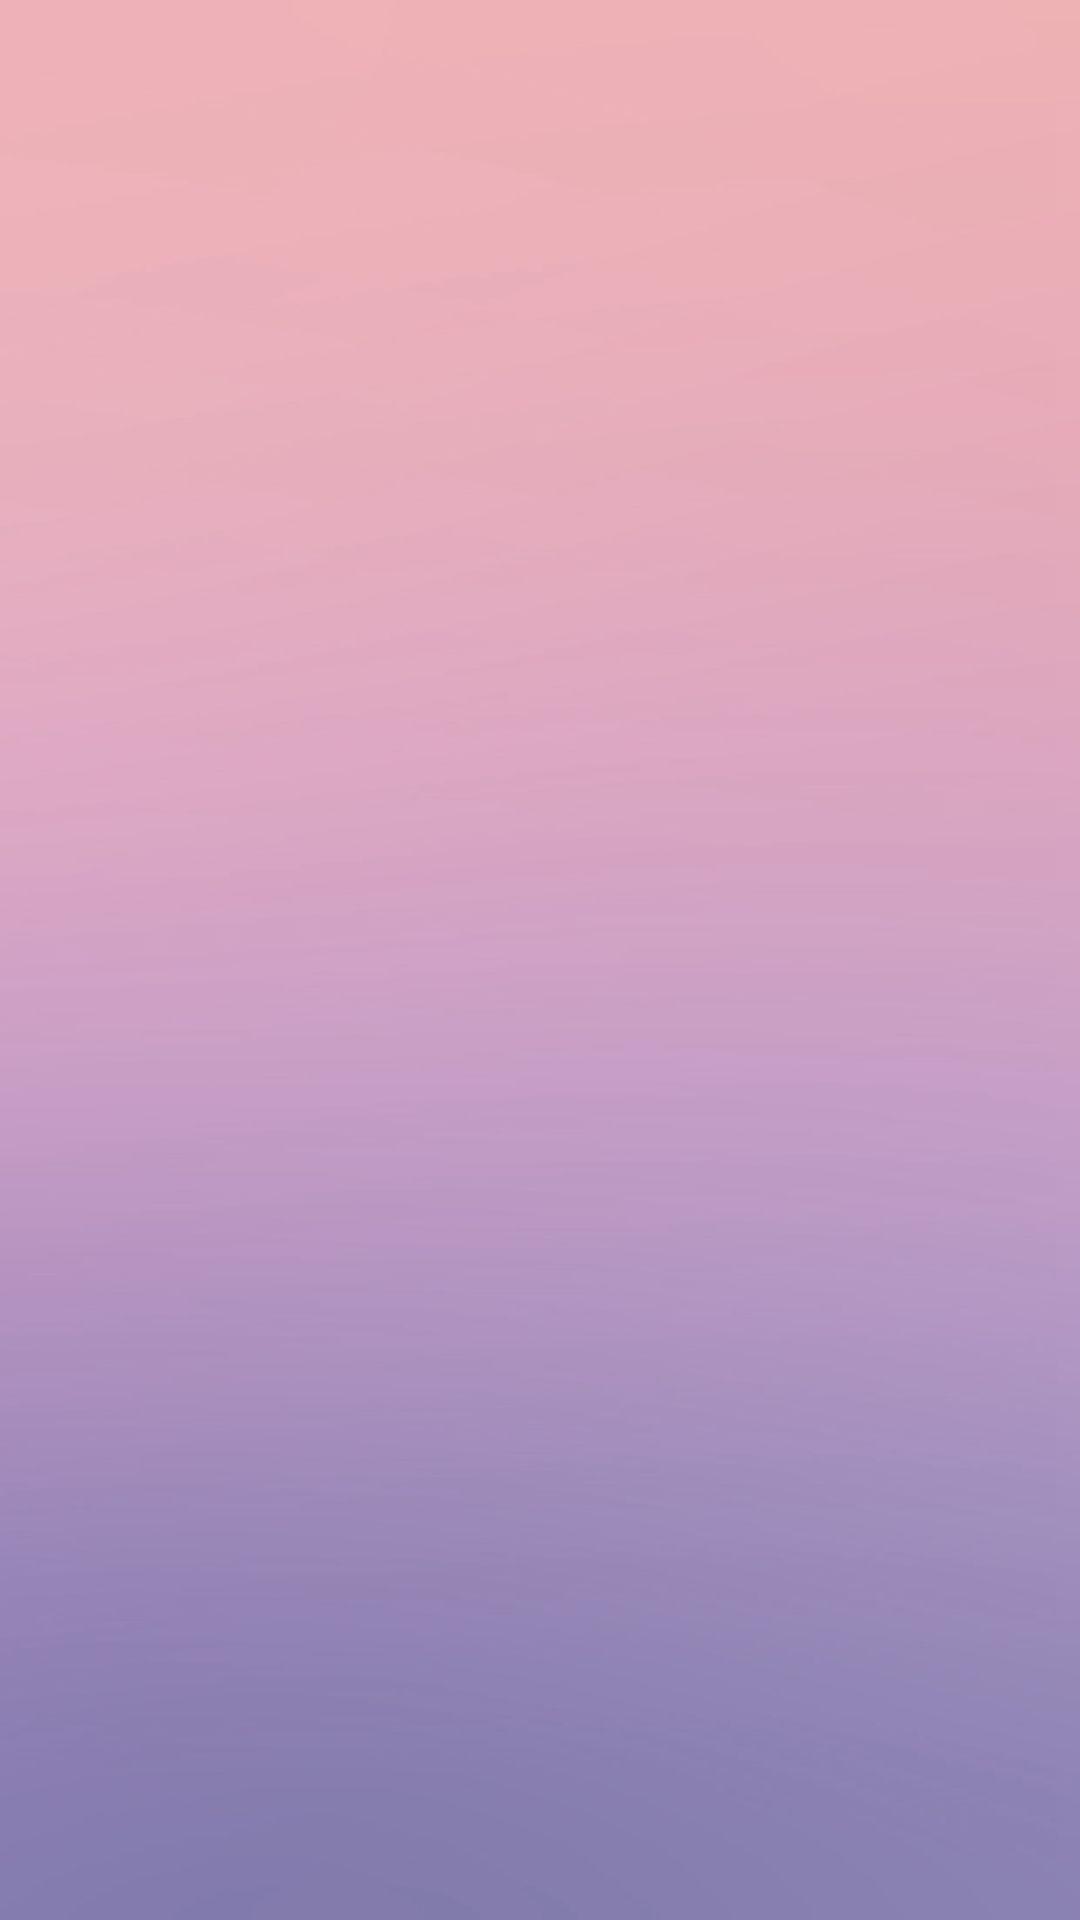 Pink Blue Purple Harmony Gradation Blur iPhone 6 wallpaper. Phone